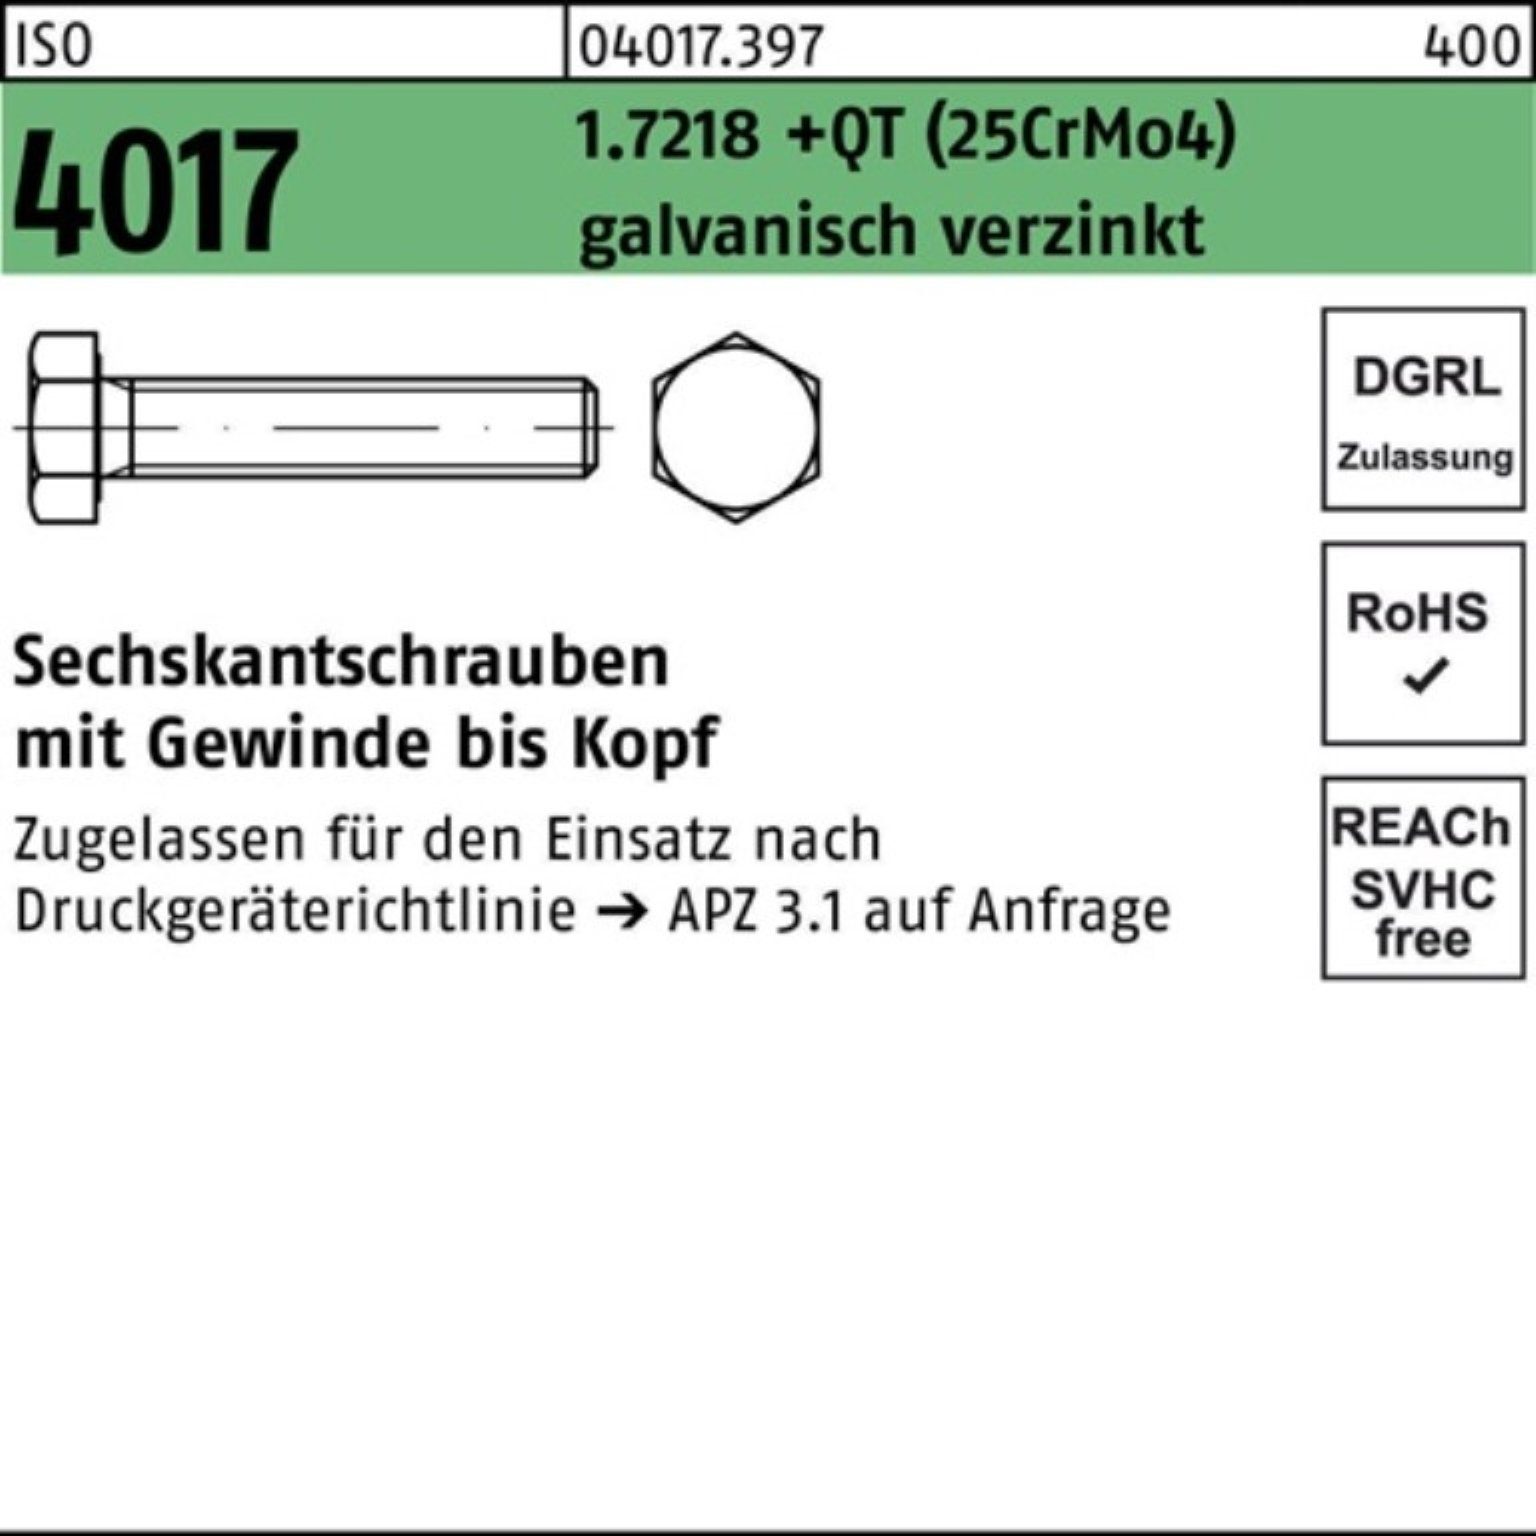 Bufab Sechskantschraube 100er Pack Sechskantschraube VG 1.7218 ISO (25CrMo4) M20x100 +QT 4017